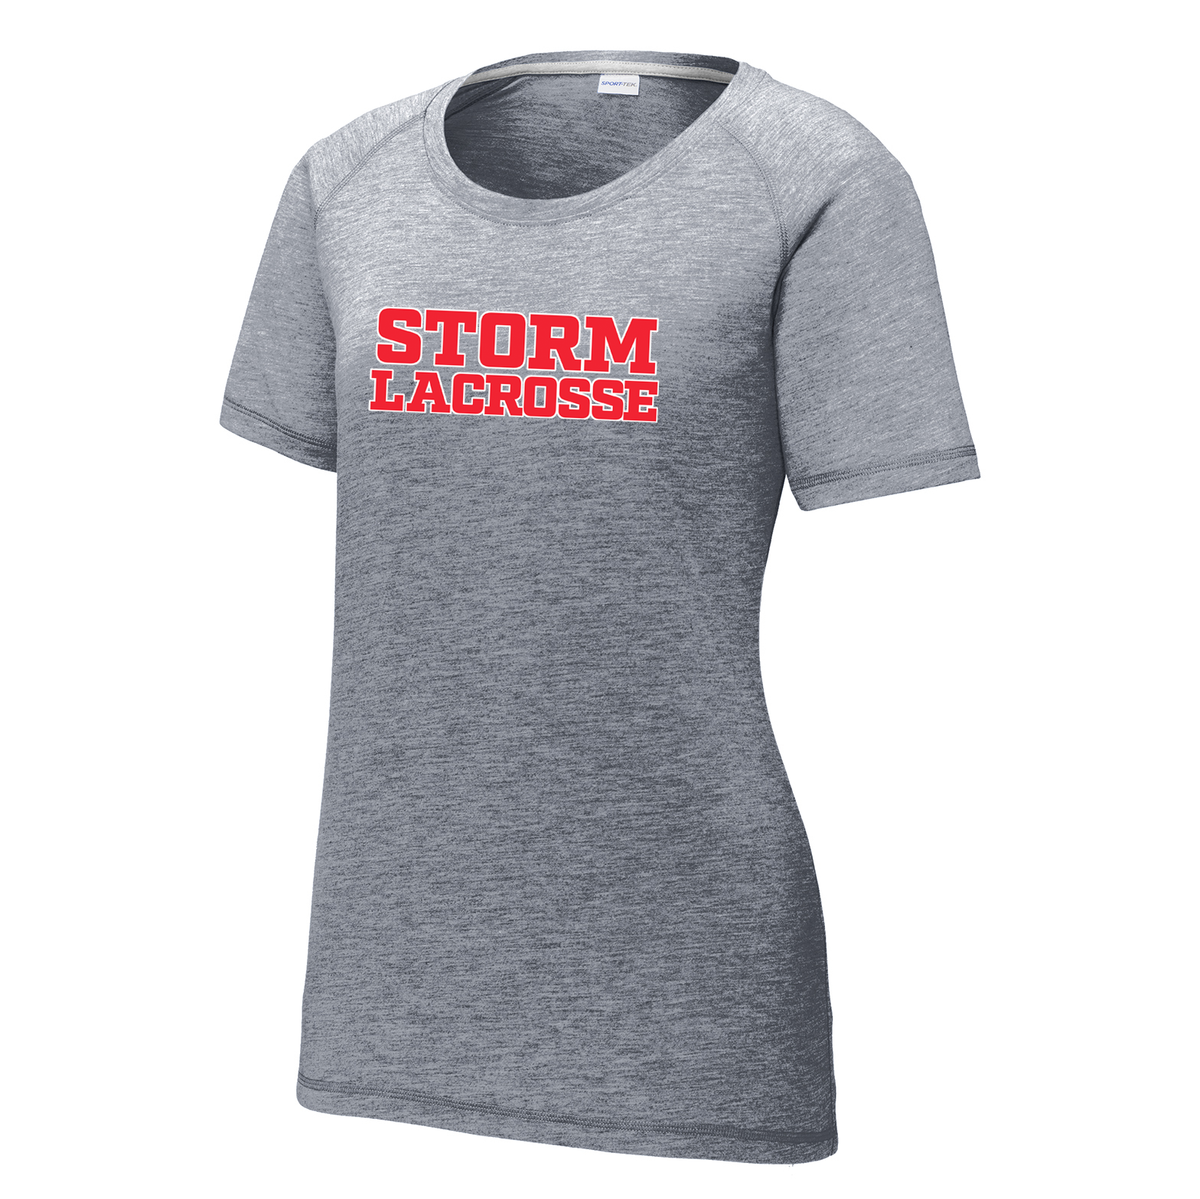 Storm Lacrosse  Women's Raglan CottonTouch